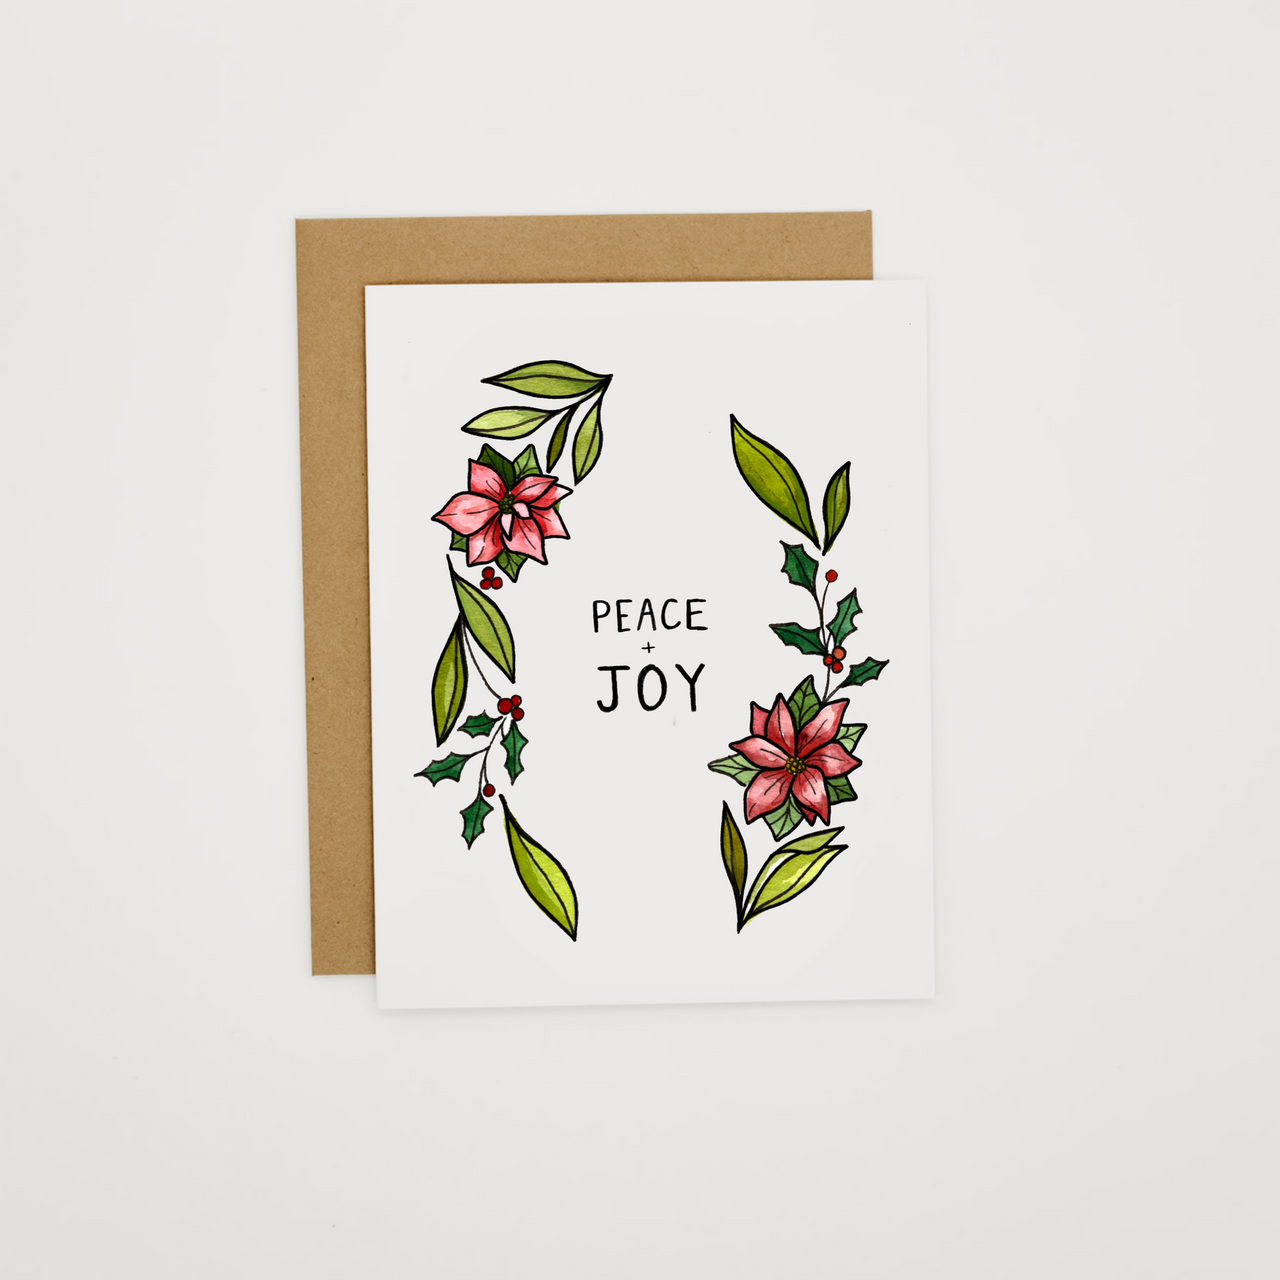 Peace Card